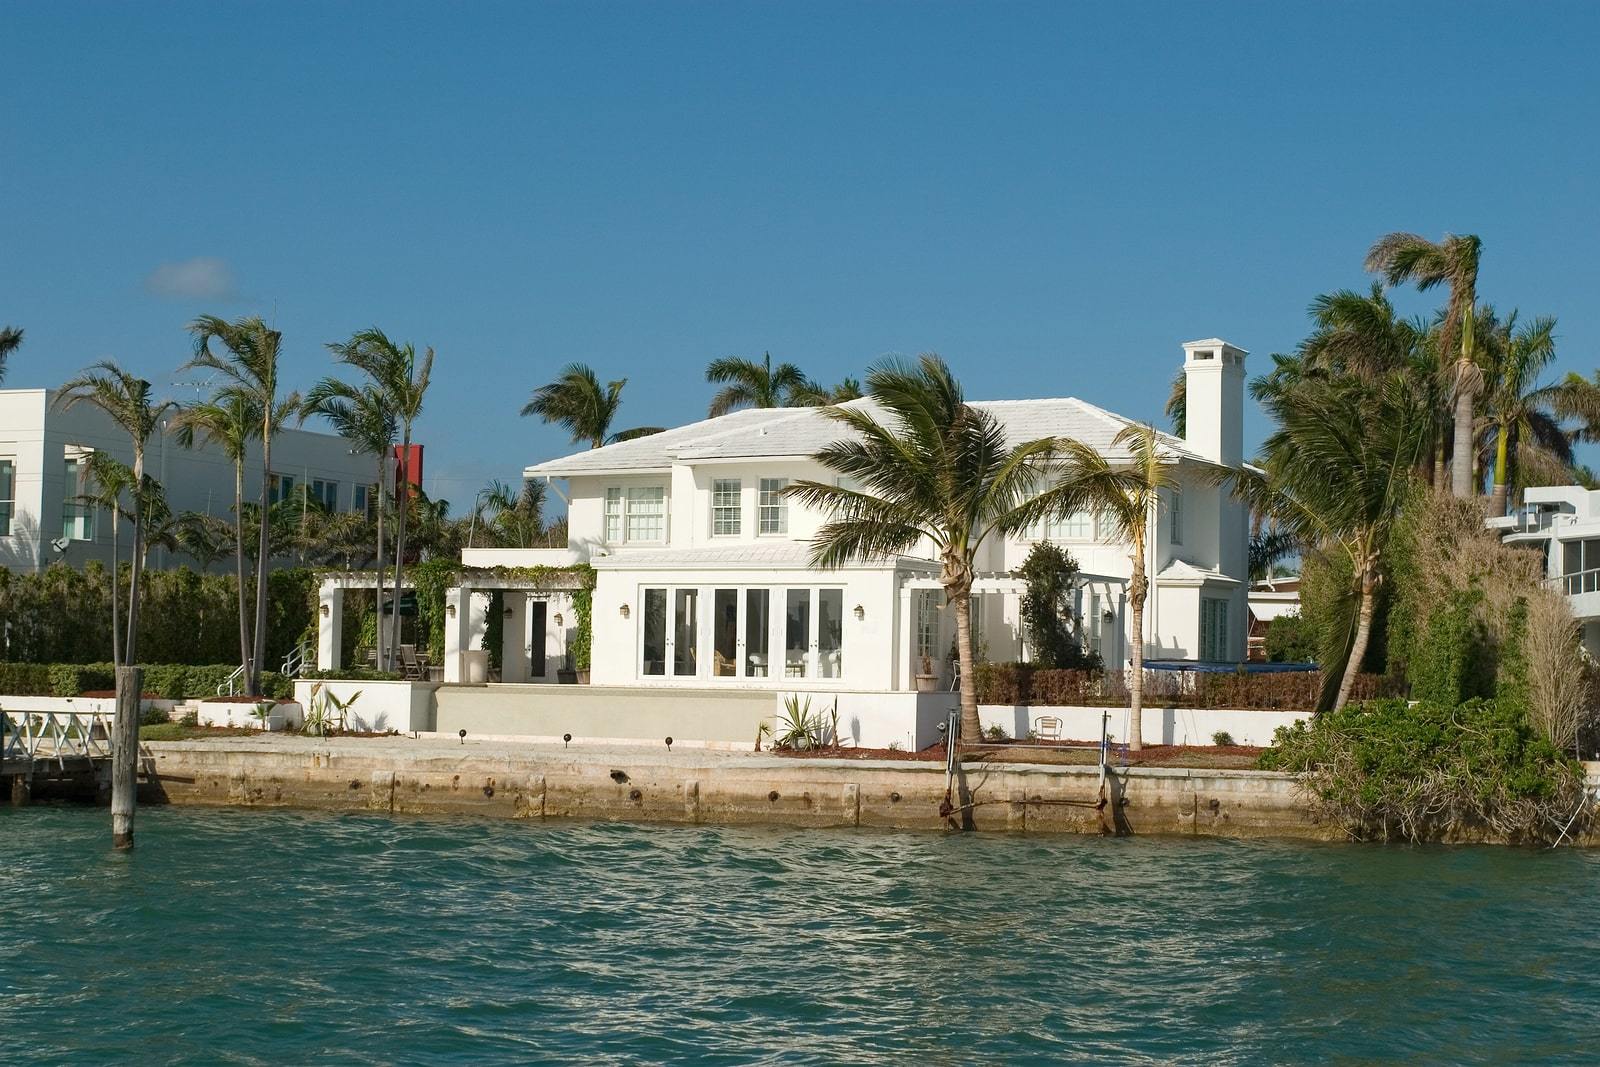 Luxury home overlooking Florida Keys waterway